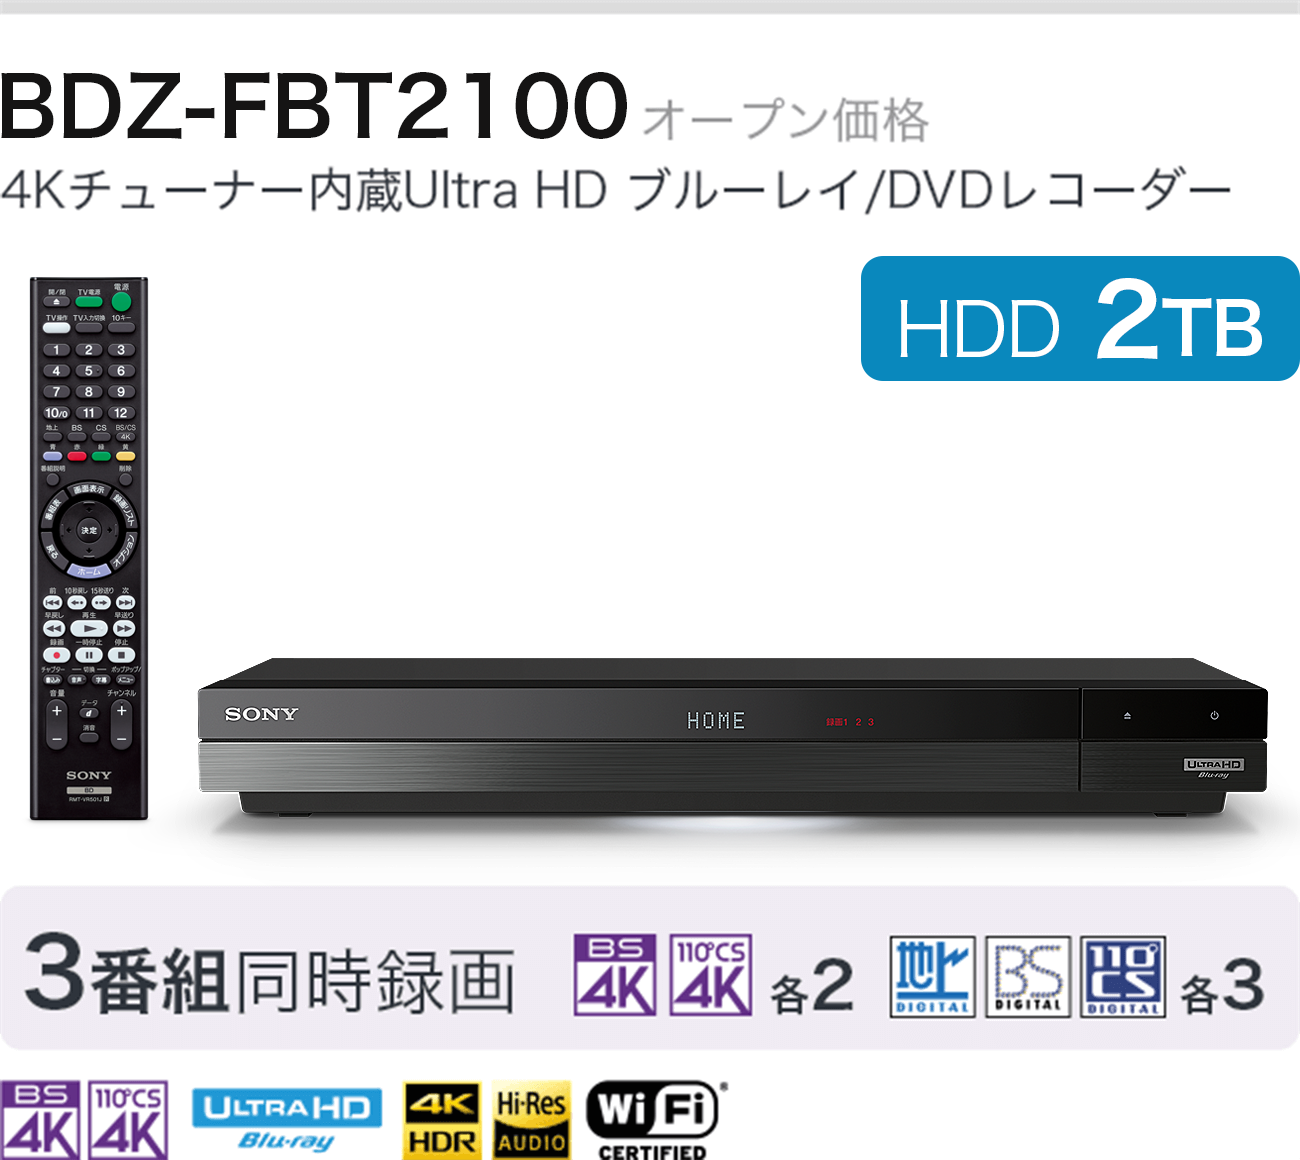 BDZ-FBT2100 オープン価格 4Kチューナー内蔵Ultra HD ブルーレイ/DVDレコーダー HDD 2TB 3番組同時録画